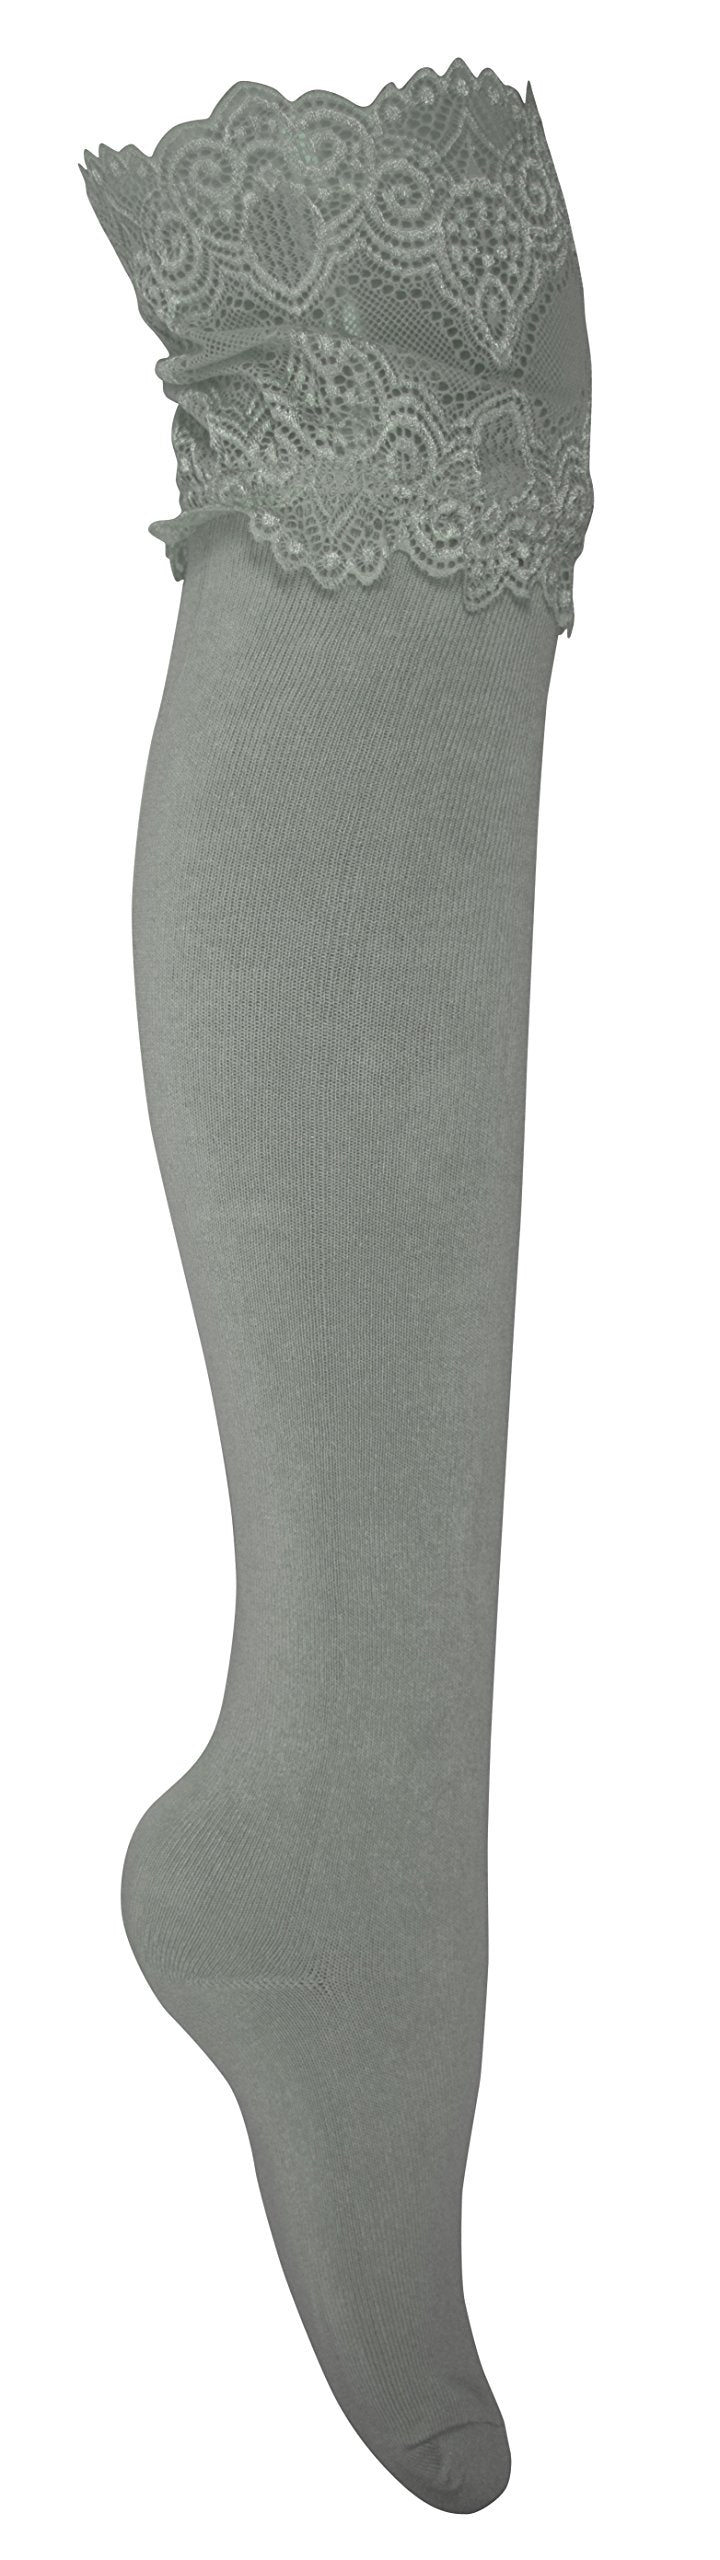 Stylish High Wide-Lace Jersey Knit Knee-High Cotton Boot Socks